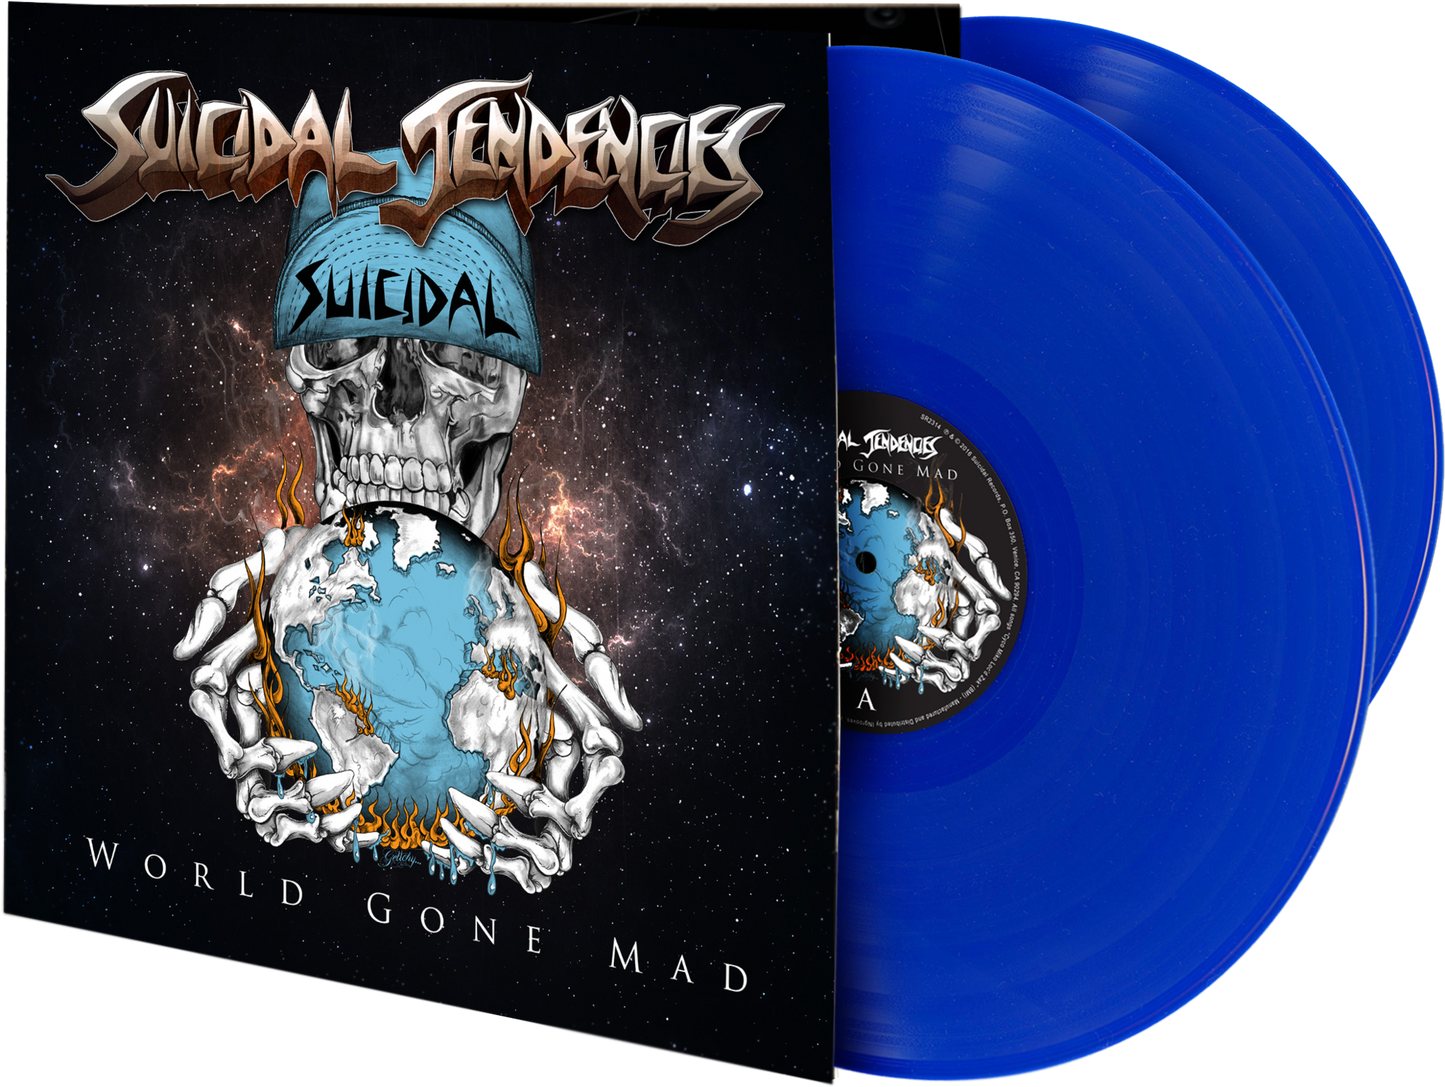 Suicidal Tendencies "World Gone Mad" 2XLP (BLUE Vinyl)